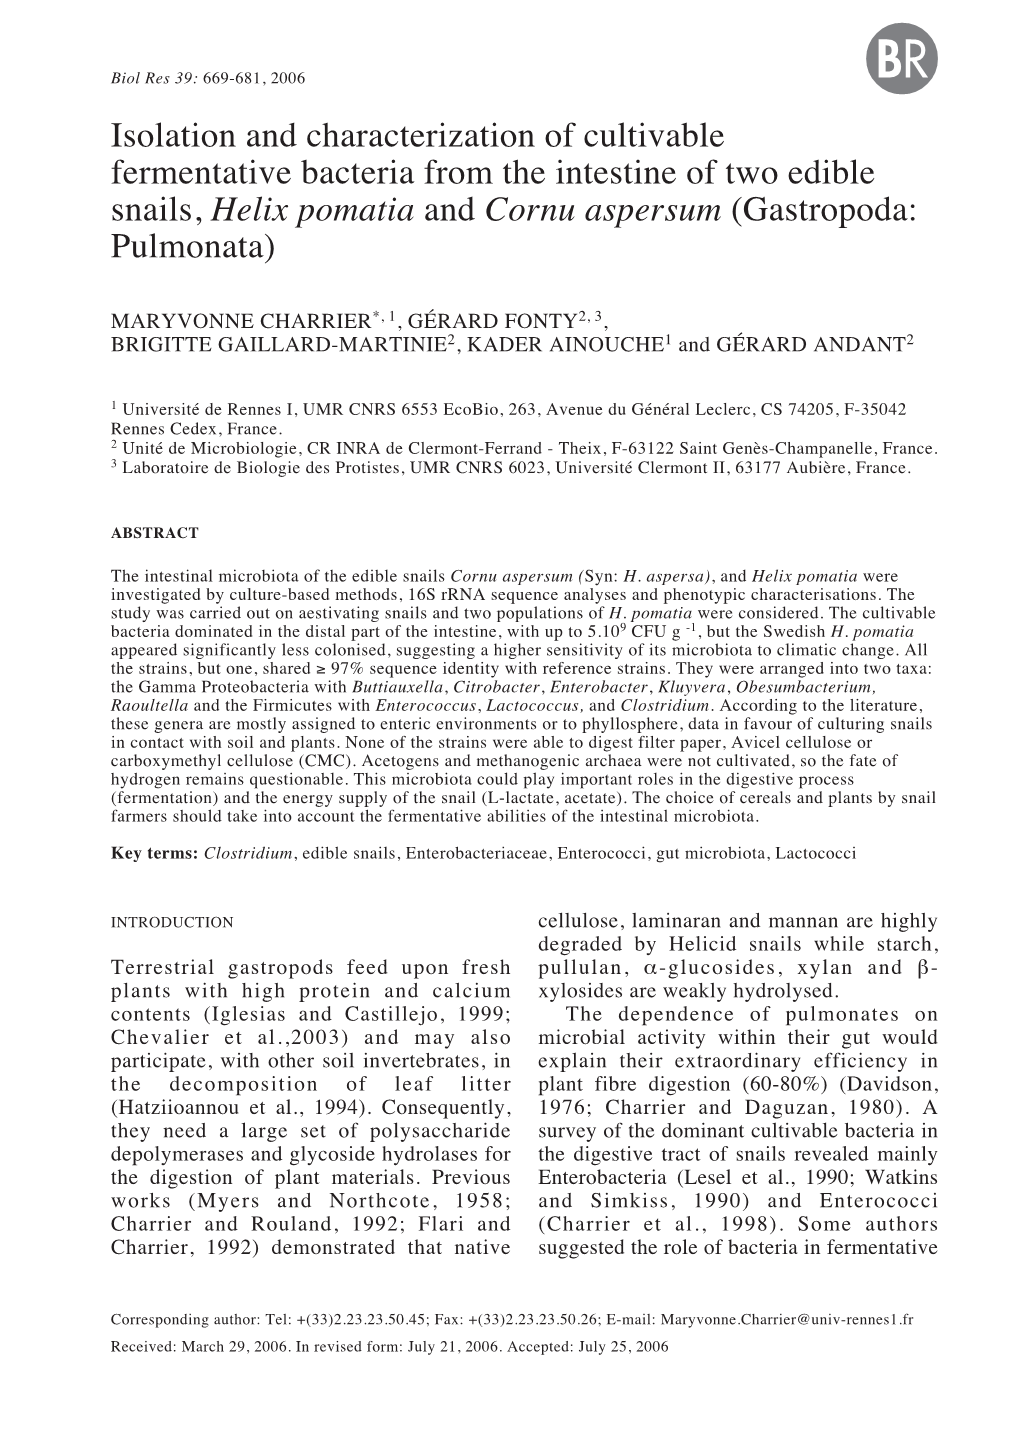 Isolation and Characterization of Cultivable Fermentative Bacteria from the Intestine of Two Edible Snails, Helix Pomatia and Cornu Aspersum (Gastropoda: Pulmonata)